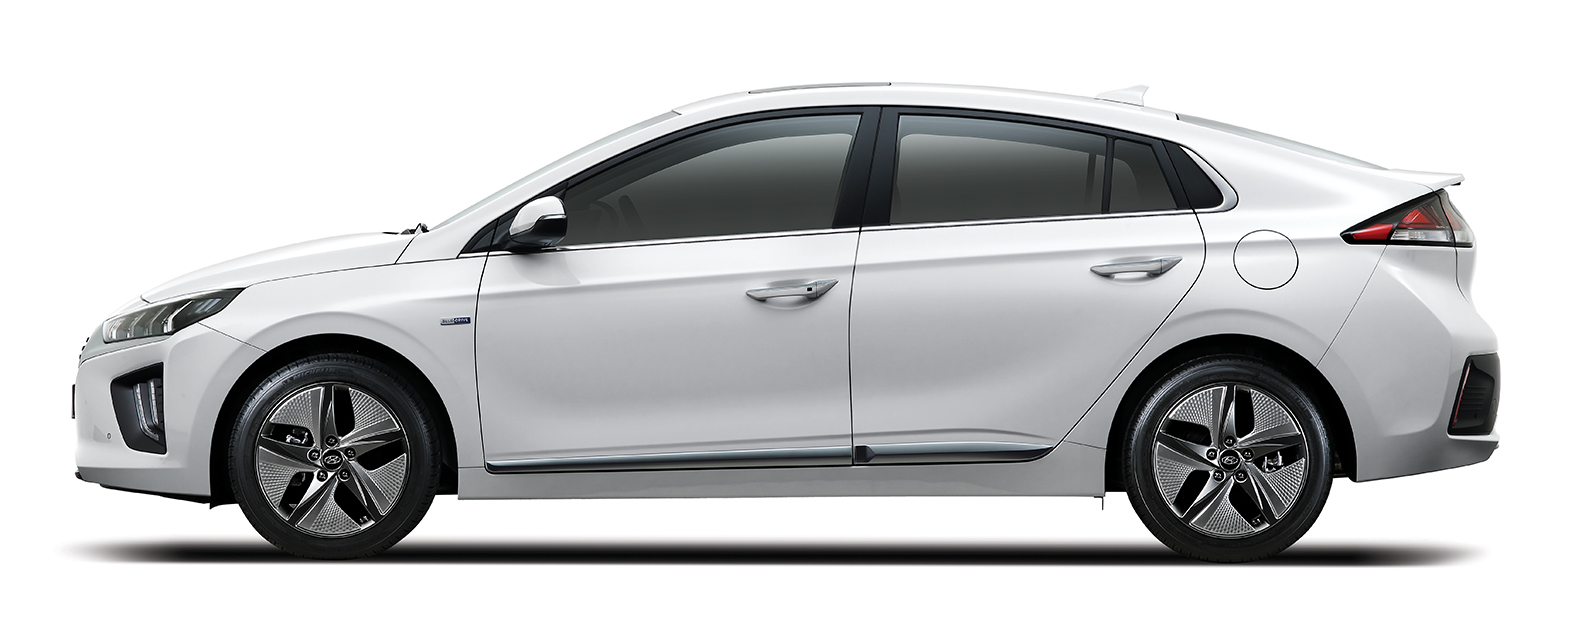 Hyundai_Ioniq_facelift_0005